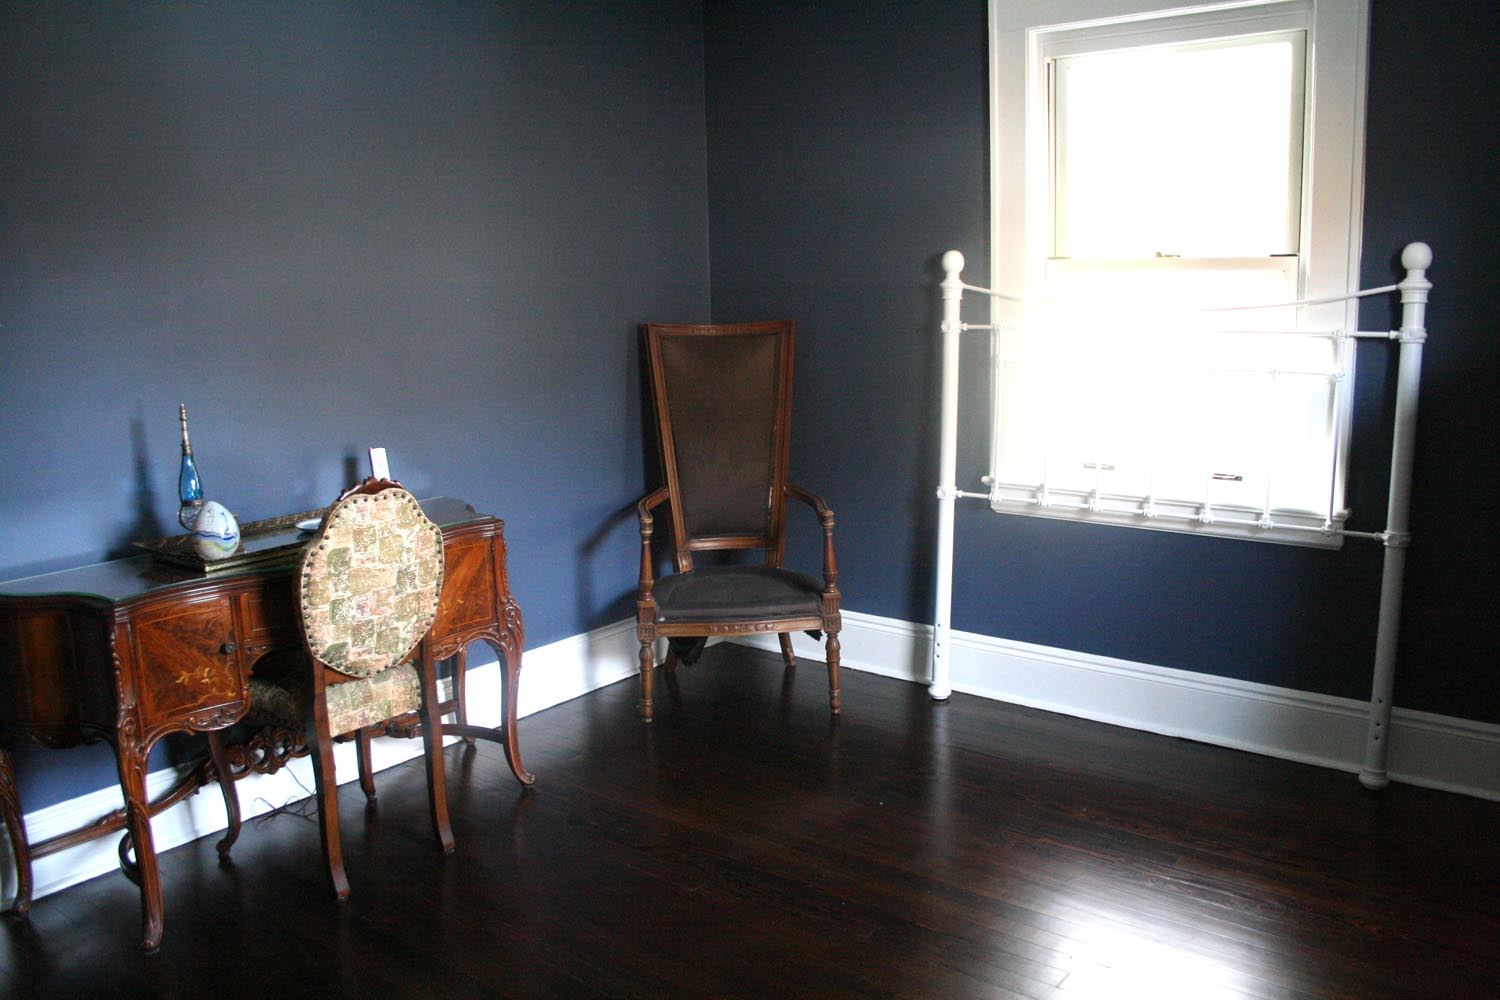 Interior with paint color Benjamin Moore Kensington Blue CC-780